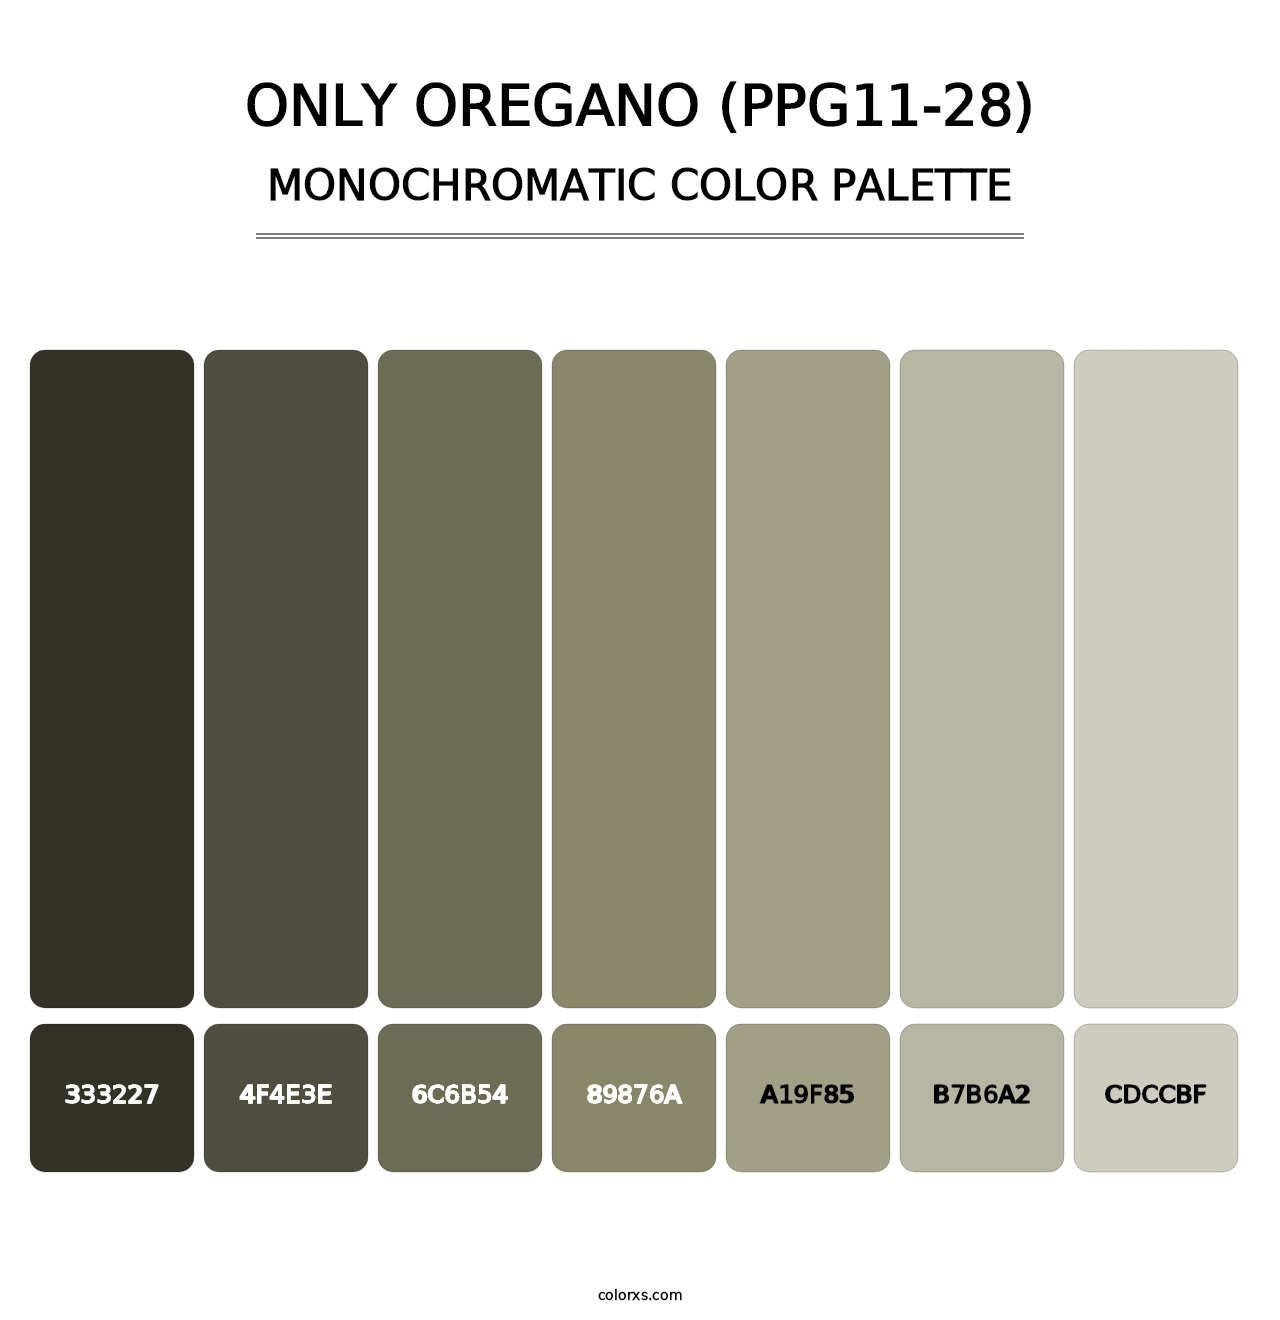 Only Oregano (PPG11-28) - Monochromatic Color Palette